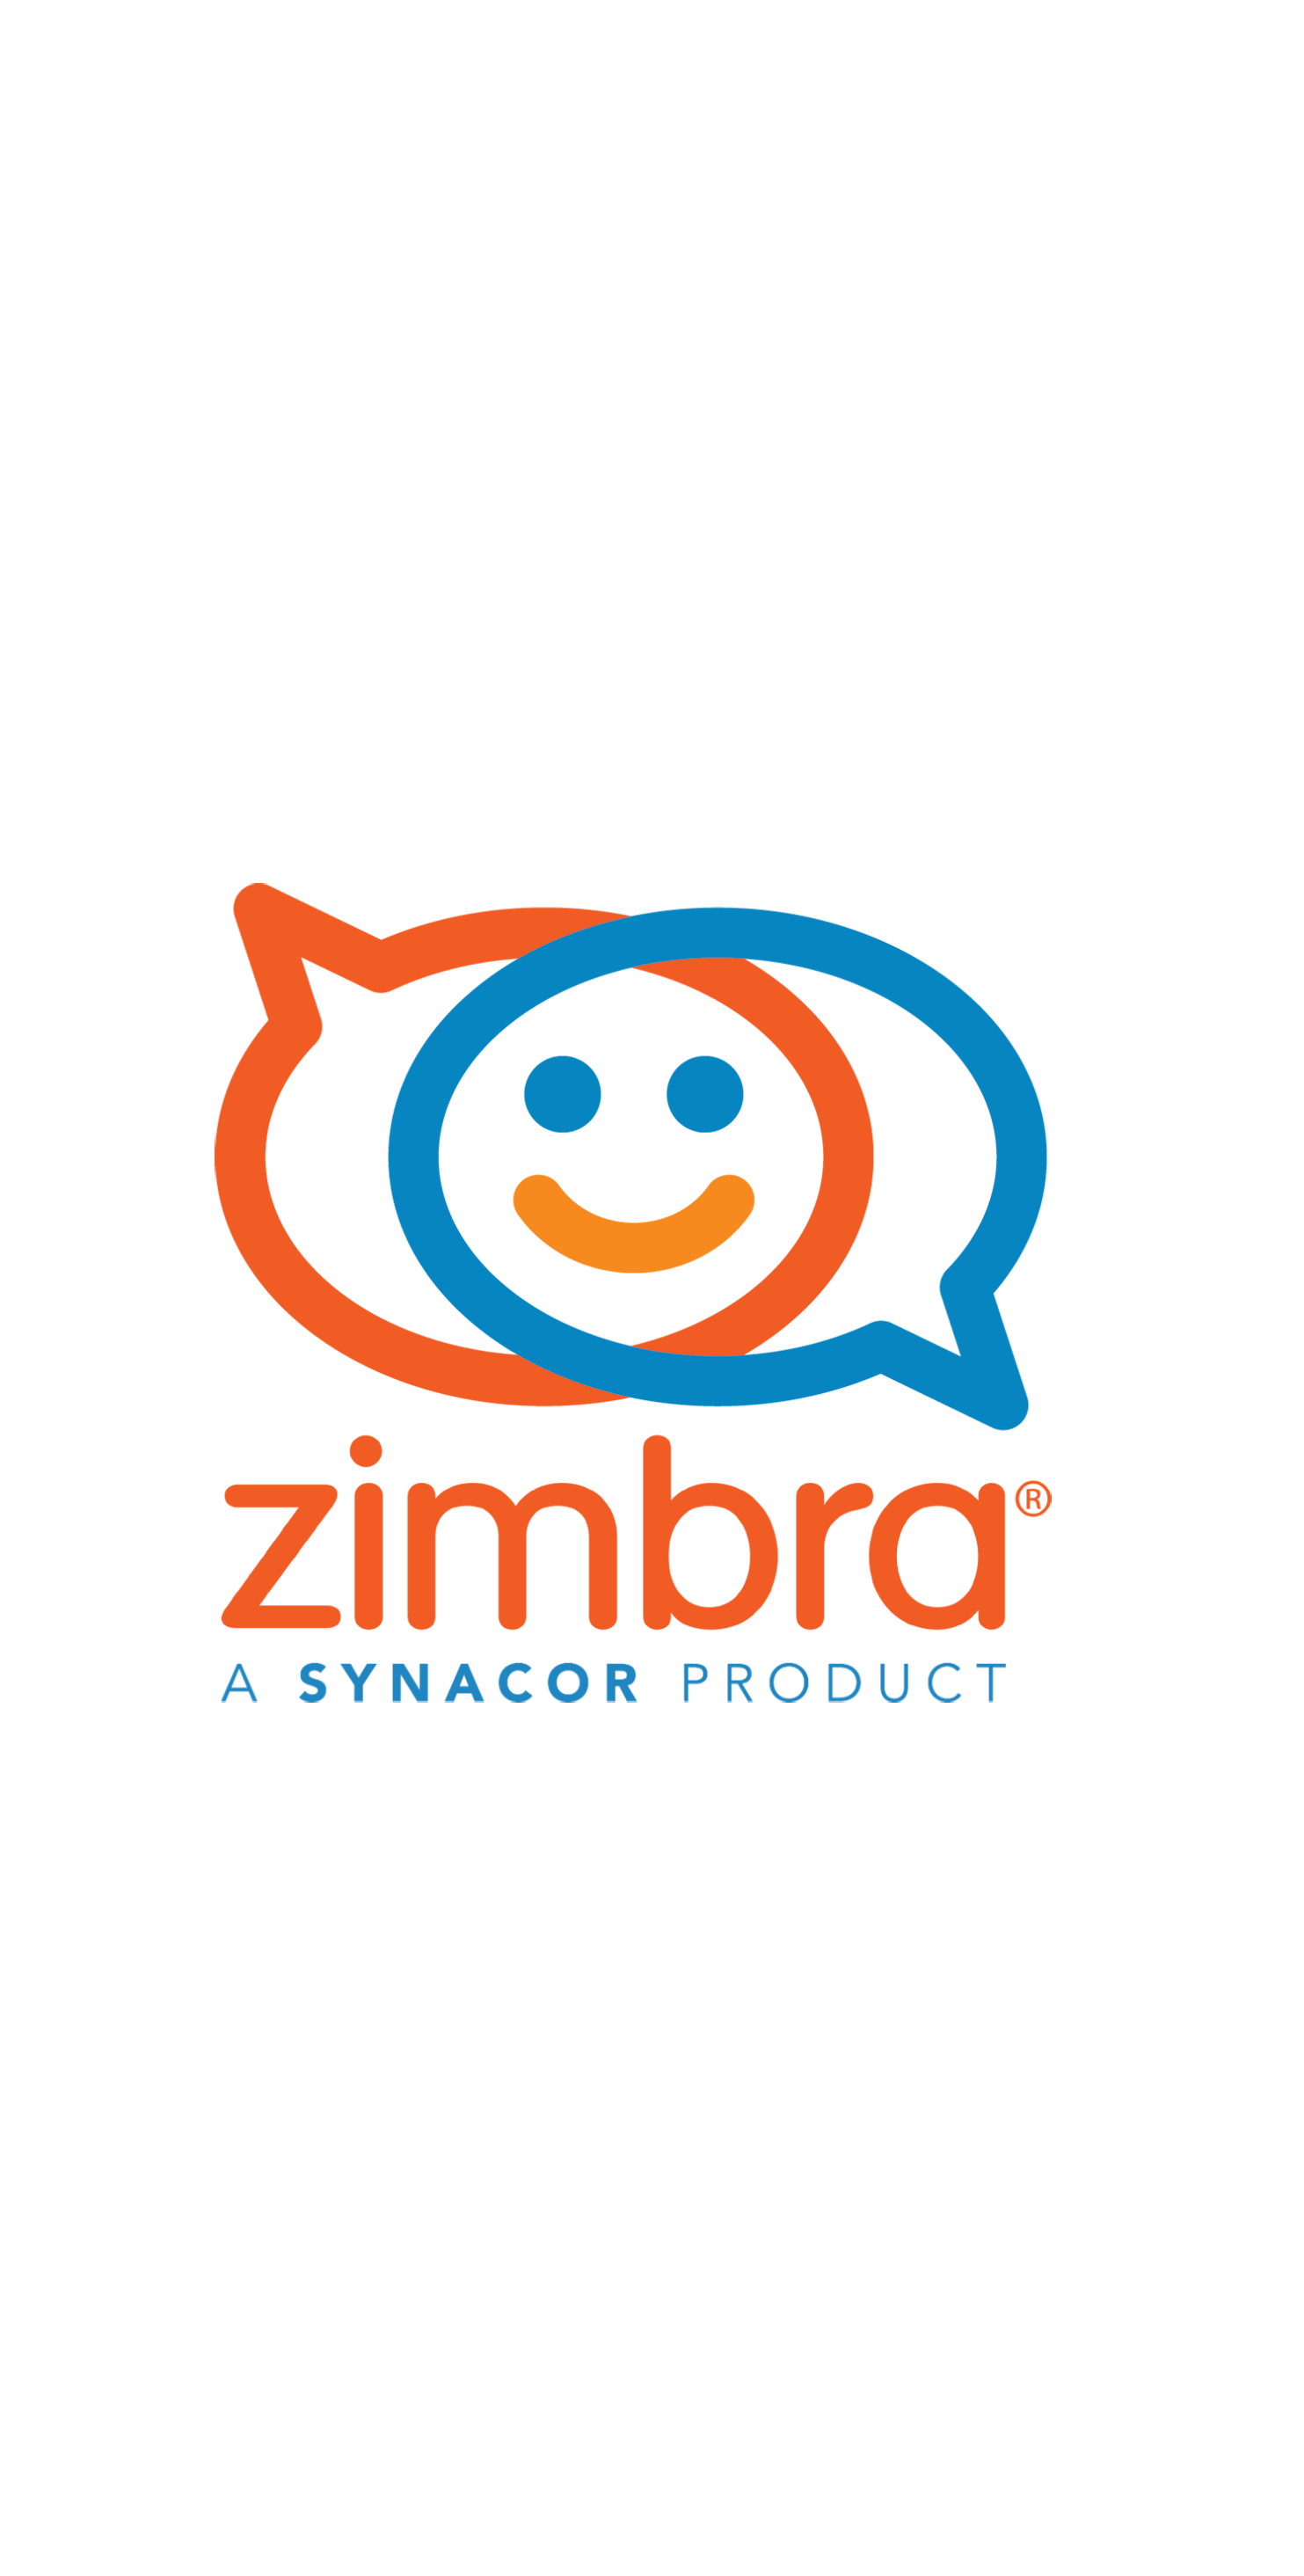 Zimbra Collaboration Suite (Open Source Edition) review